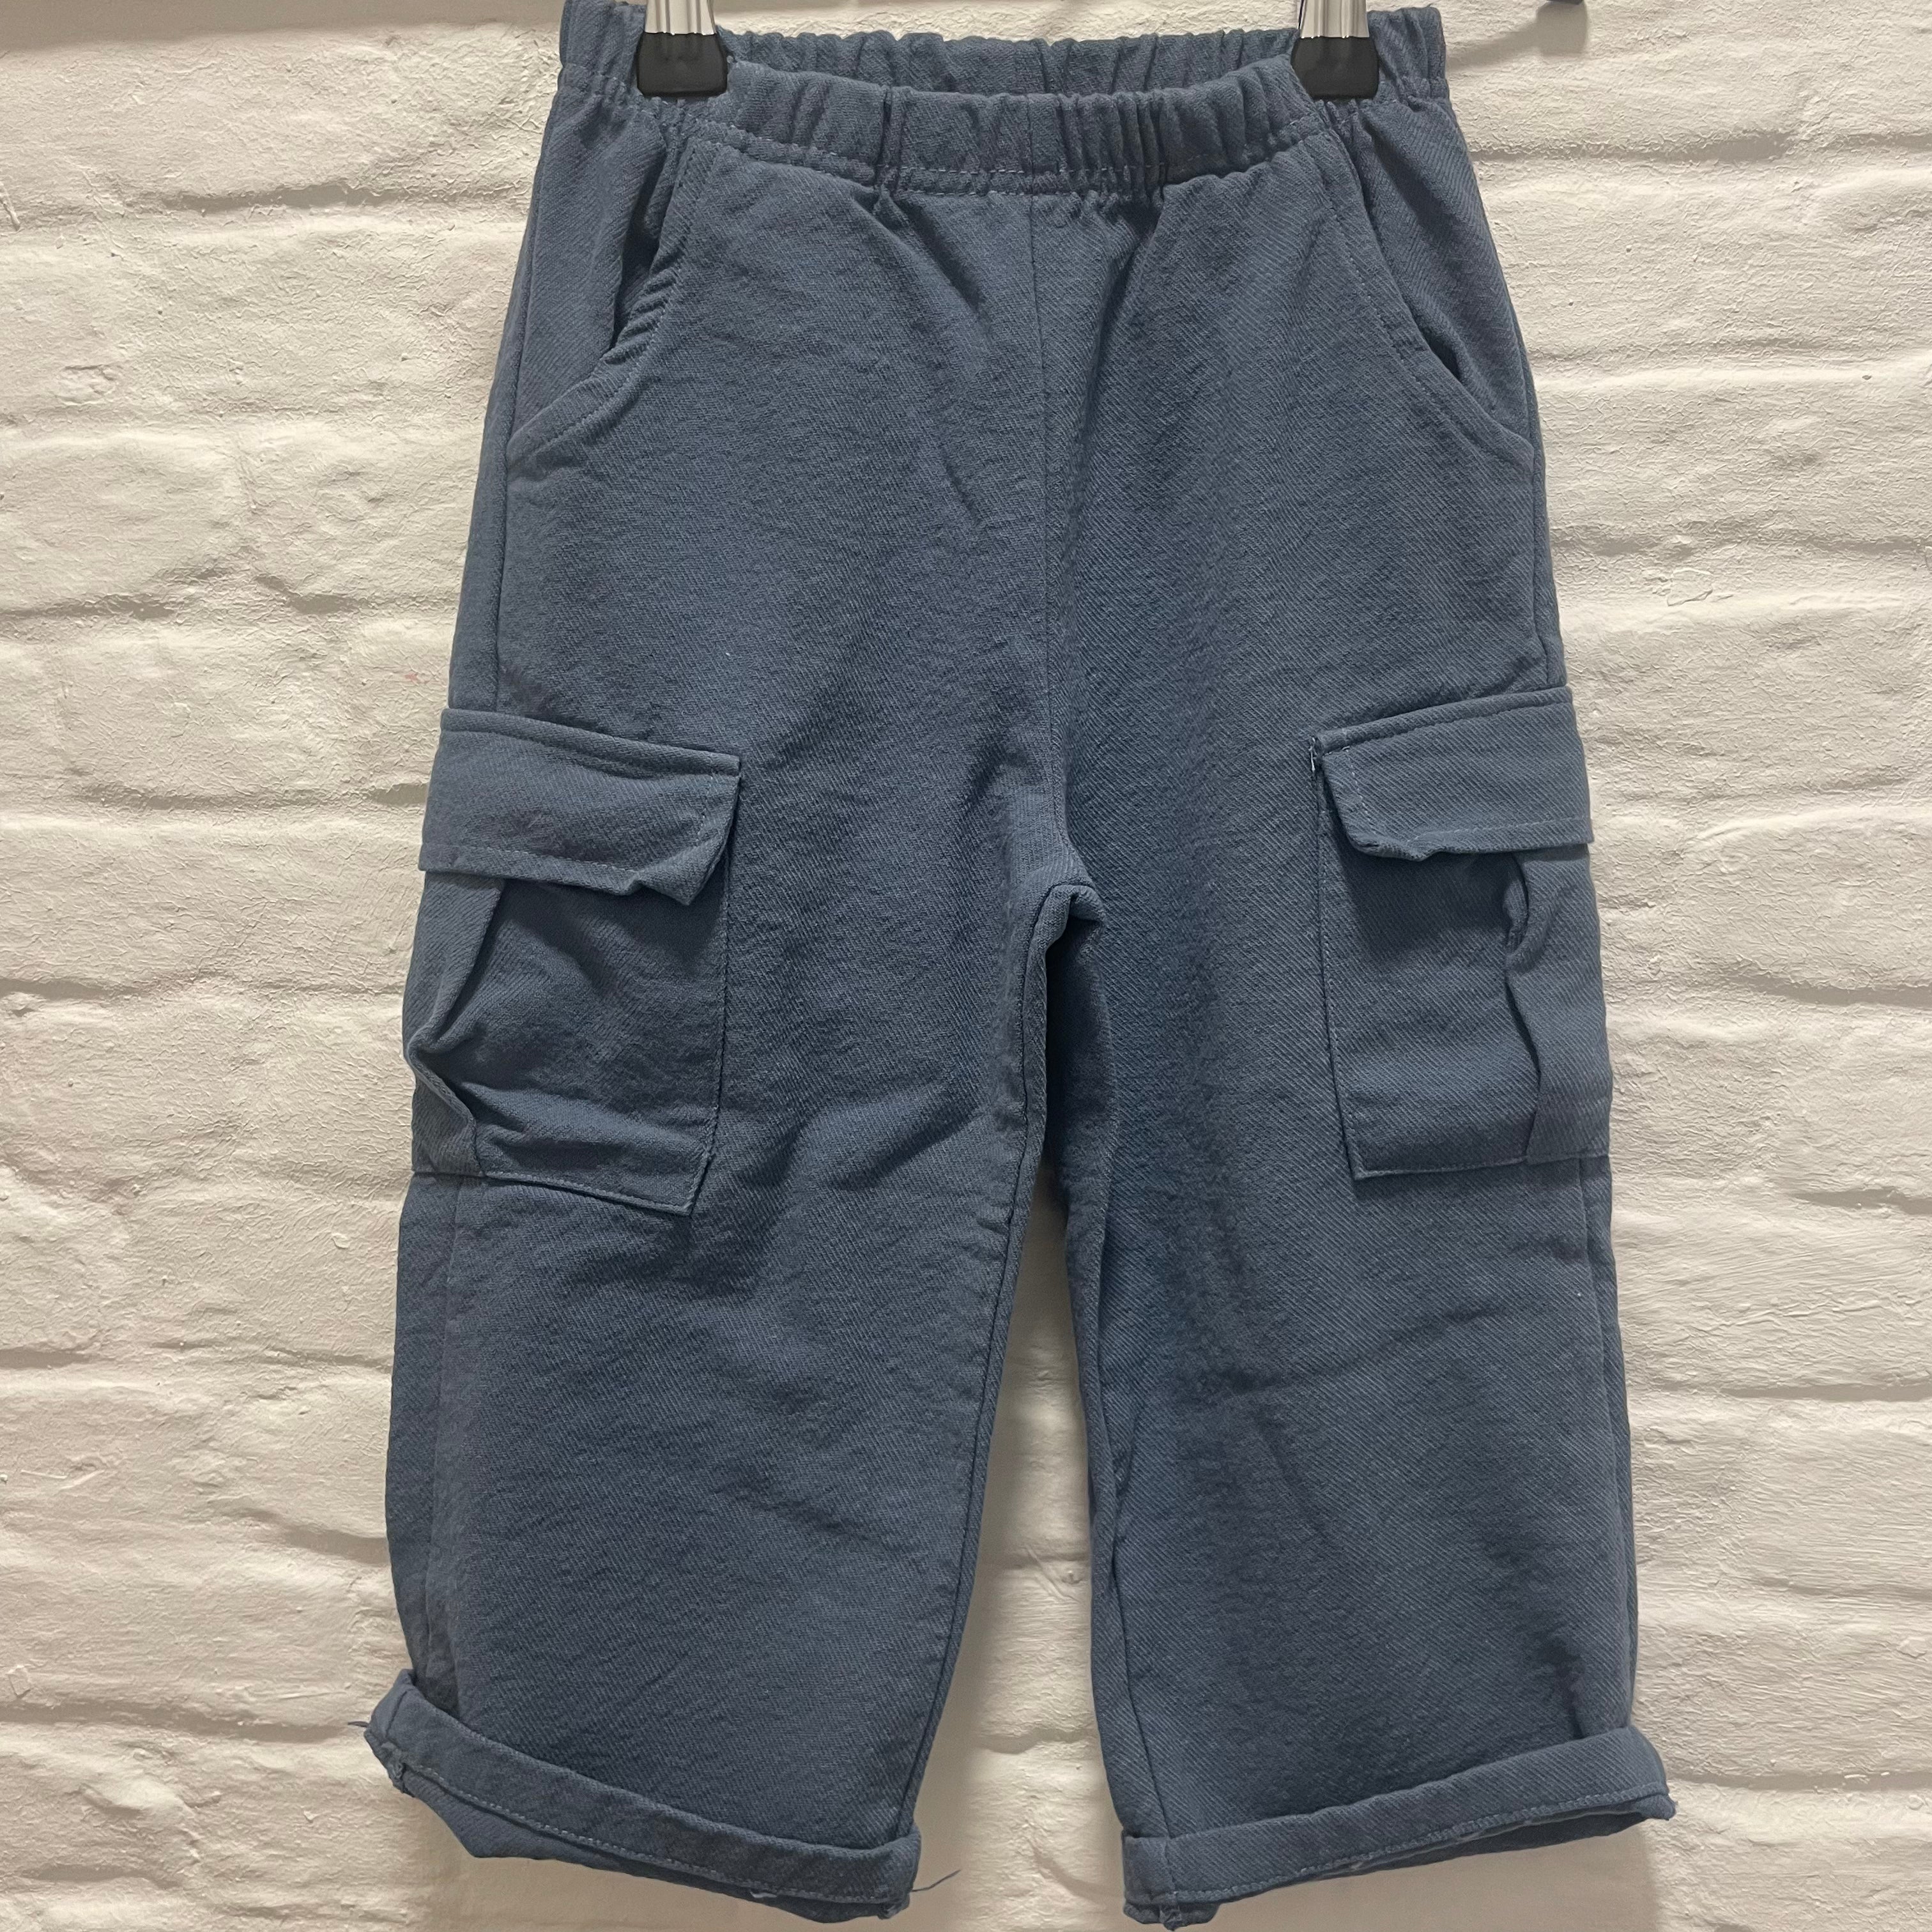 Hygge Selection - cargo pants - blue